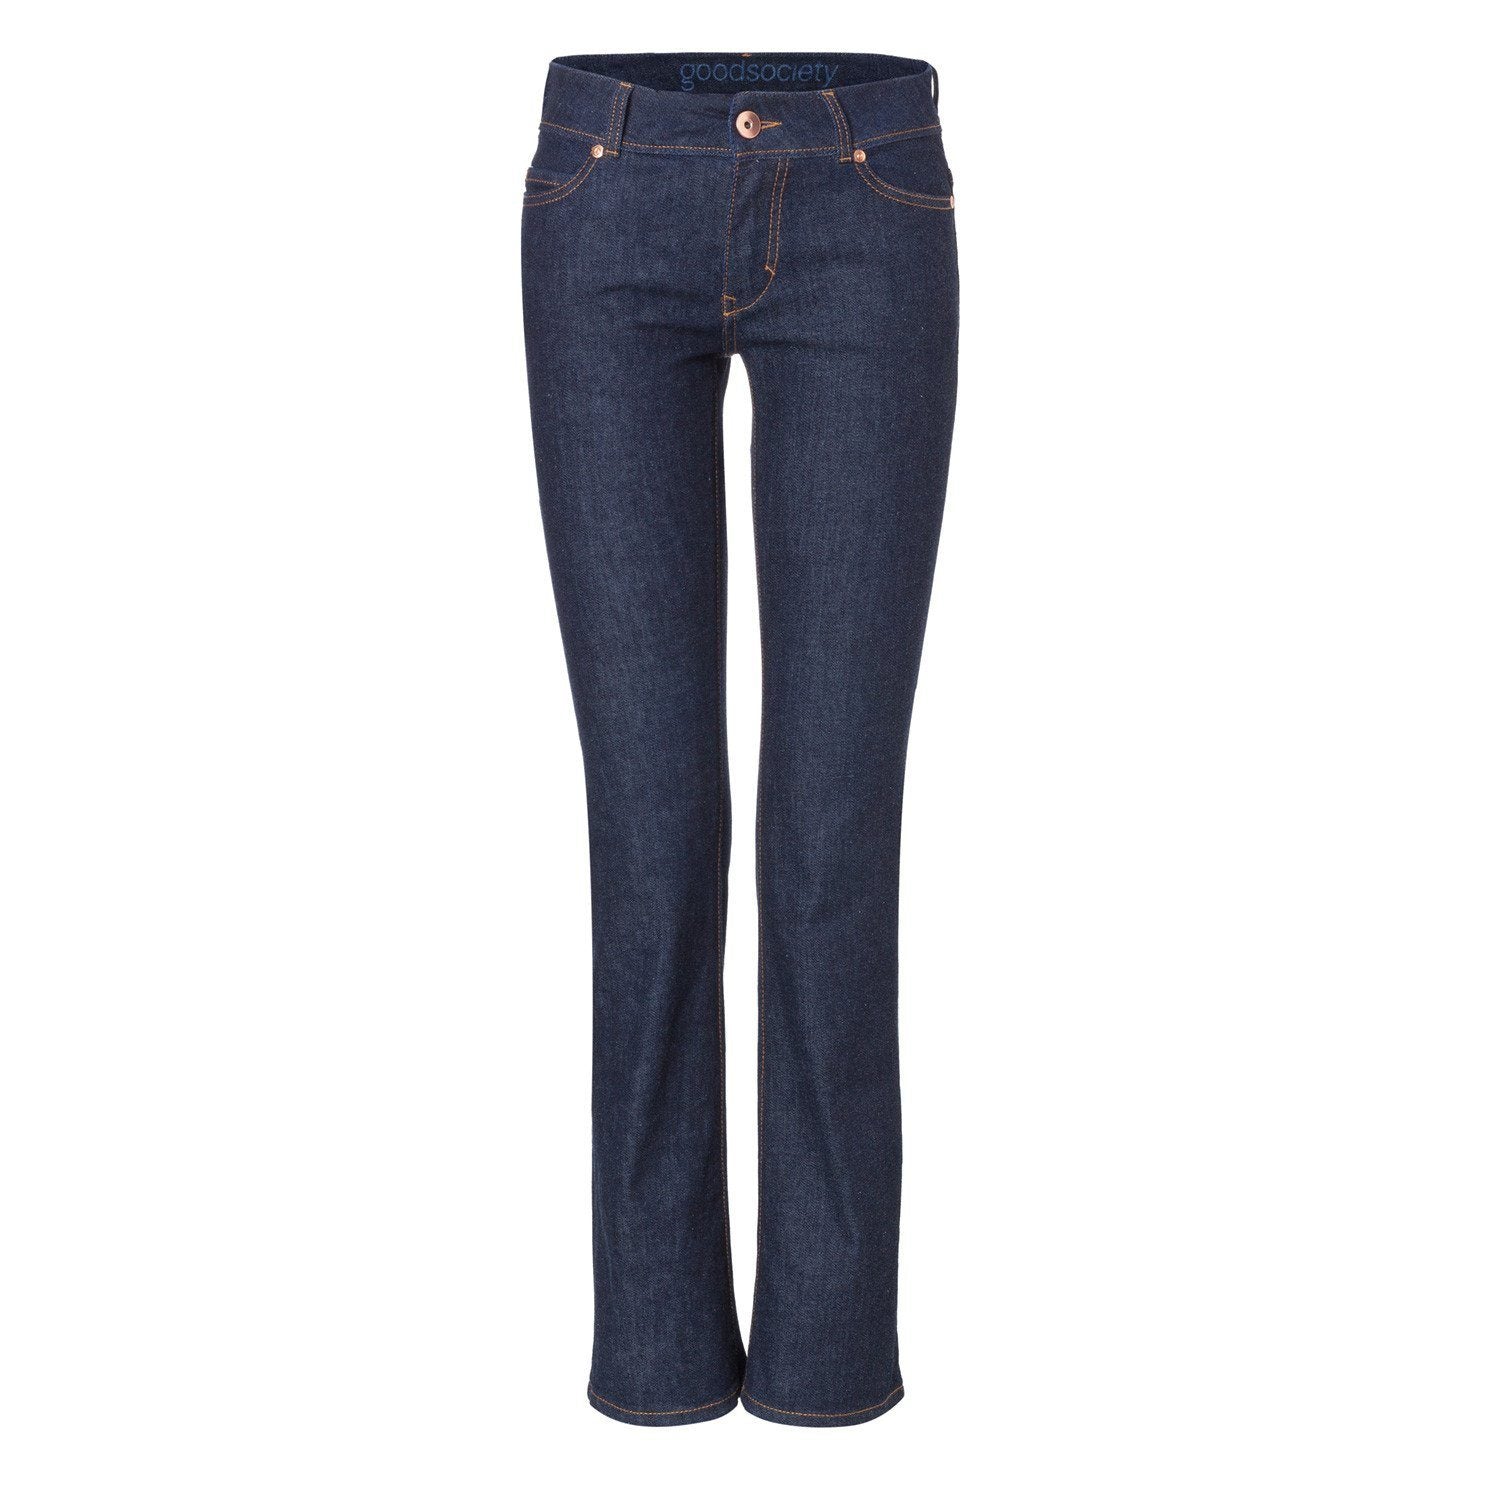 Women's organic denim jeans by goodsociety